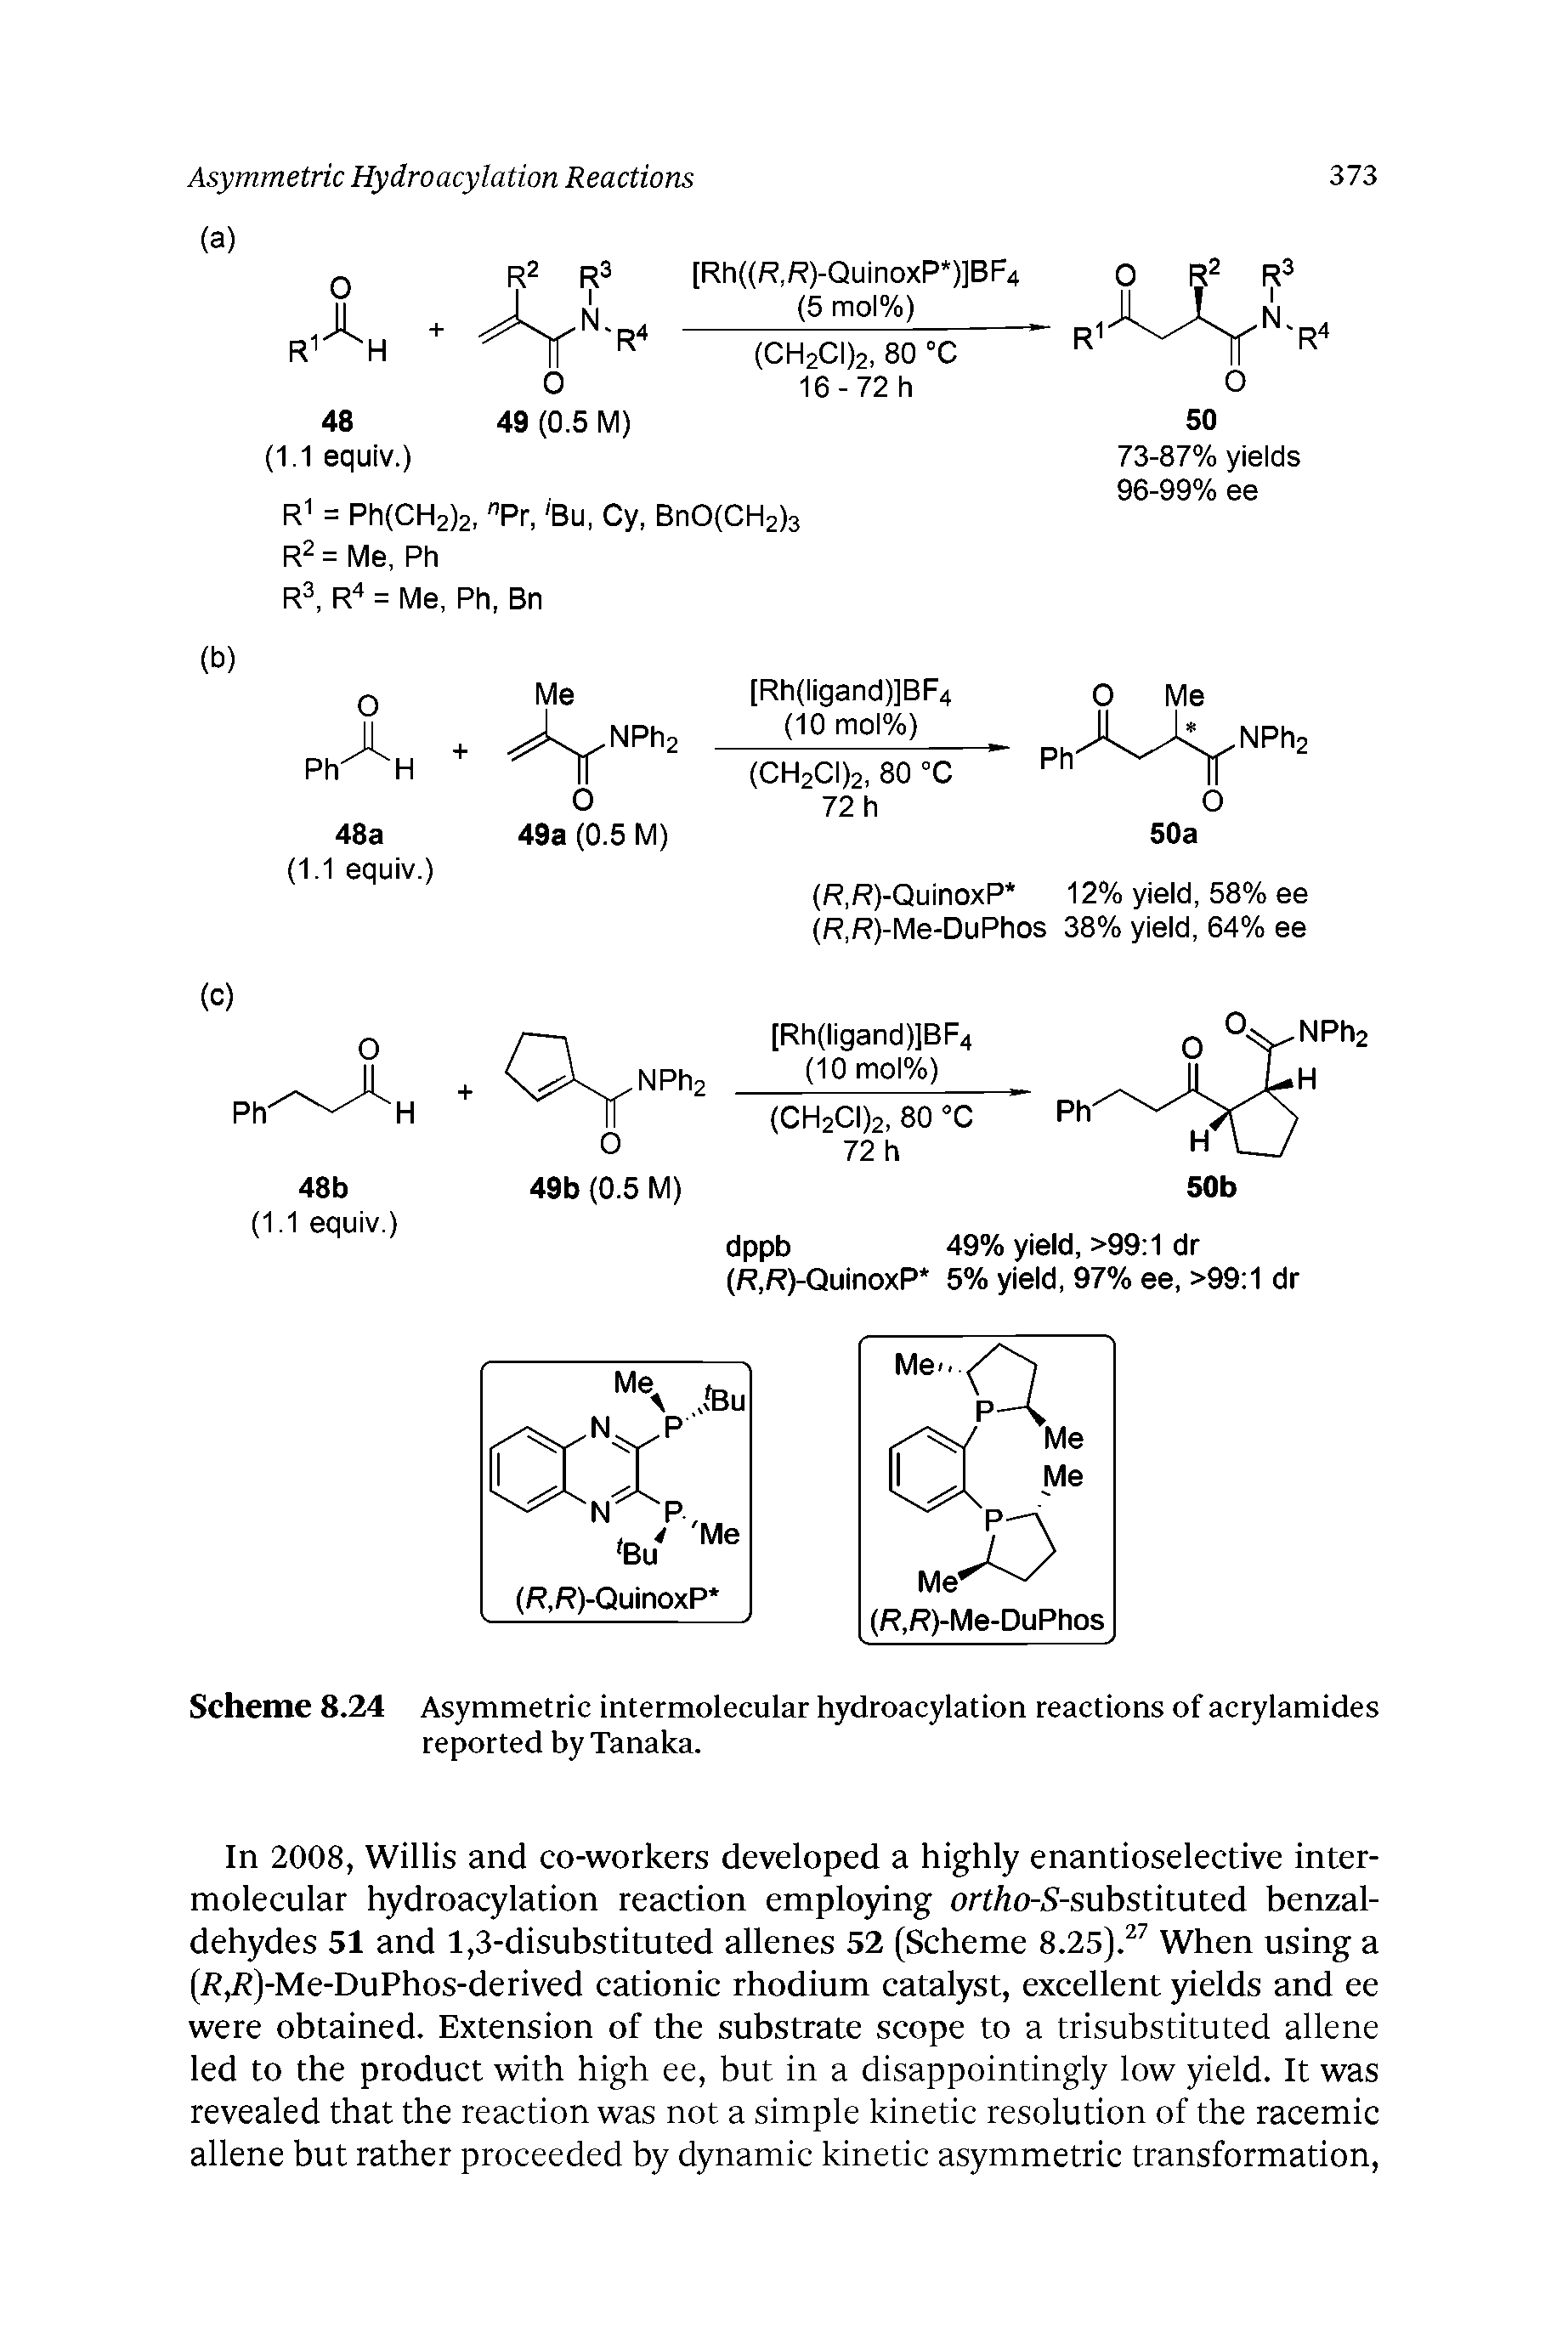 Scheme 8.24 Asymmetric intermolecular hydroacylation reactions of acrylamides reported by Tanaka.